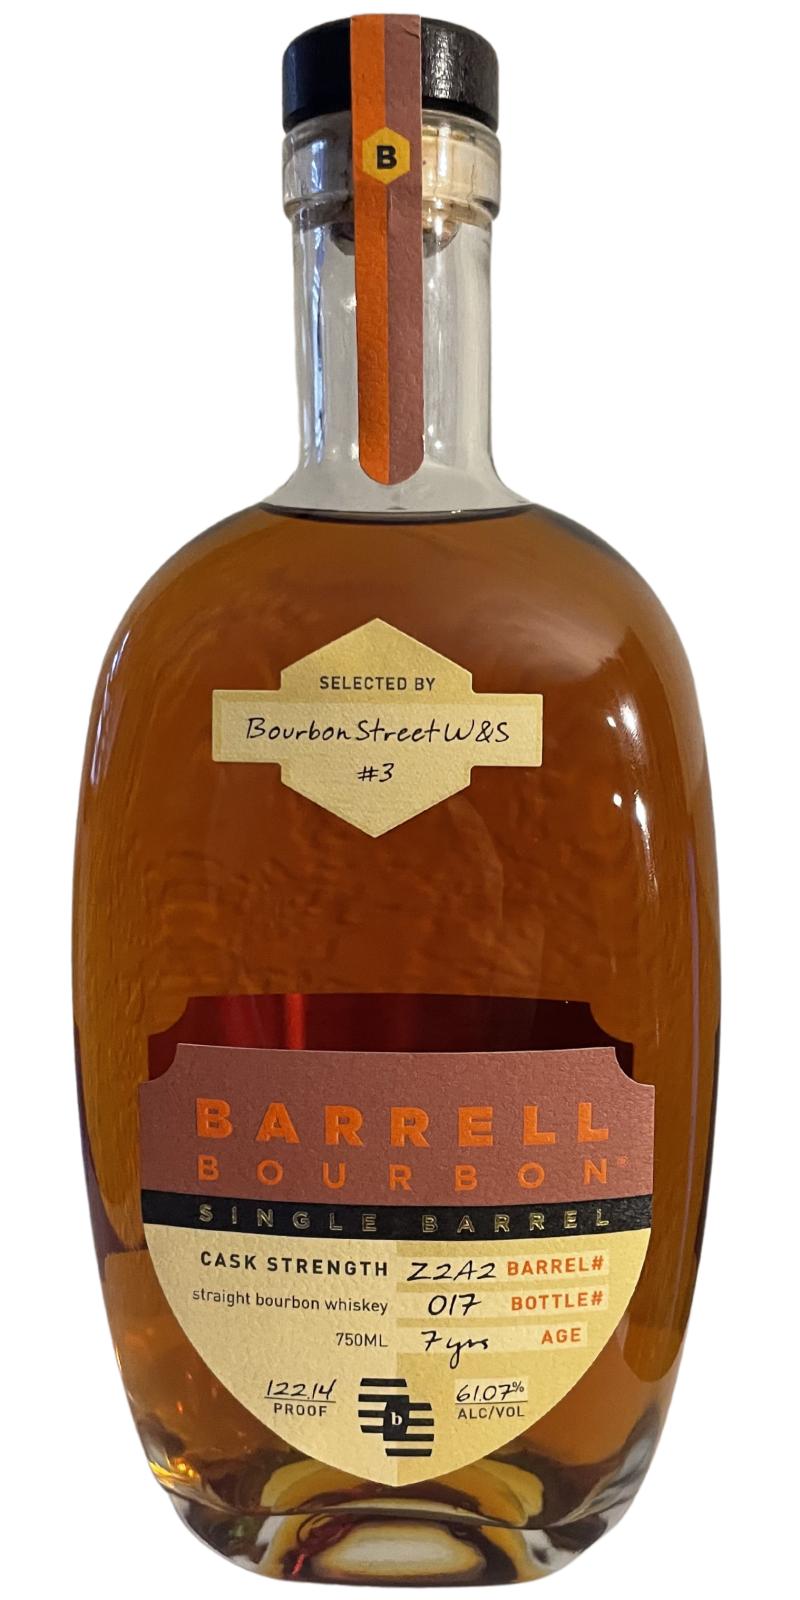 Barrell Bourbon 07-year-old